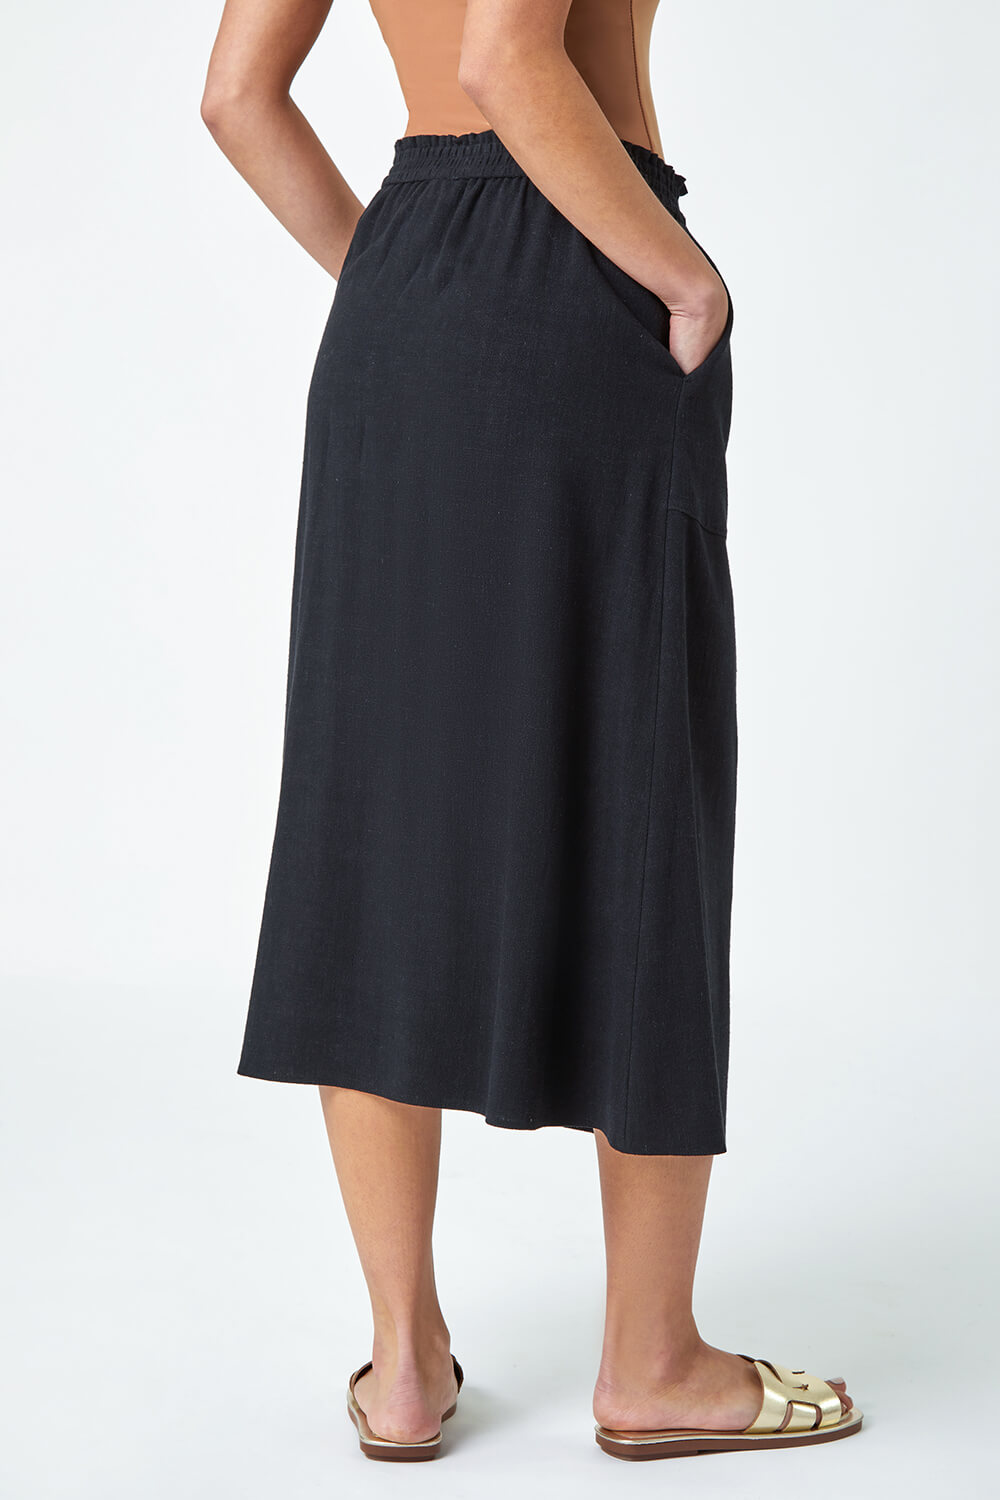 Black Petite Linen Blend Button Midi Skirt, Image 3 of 5